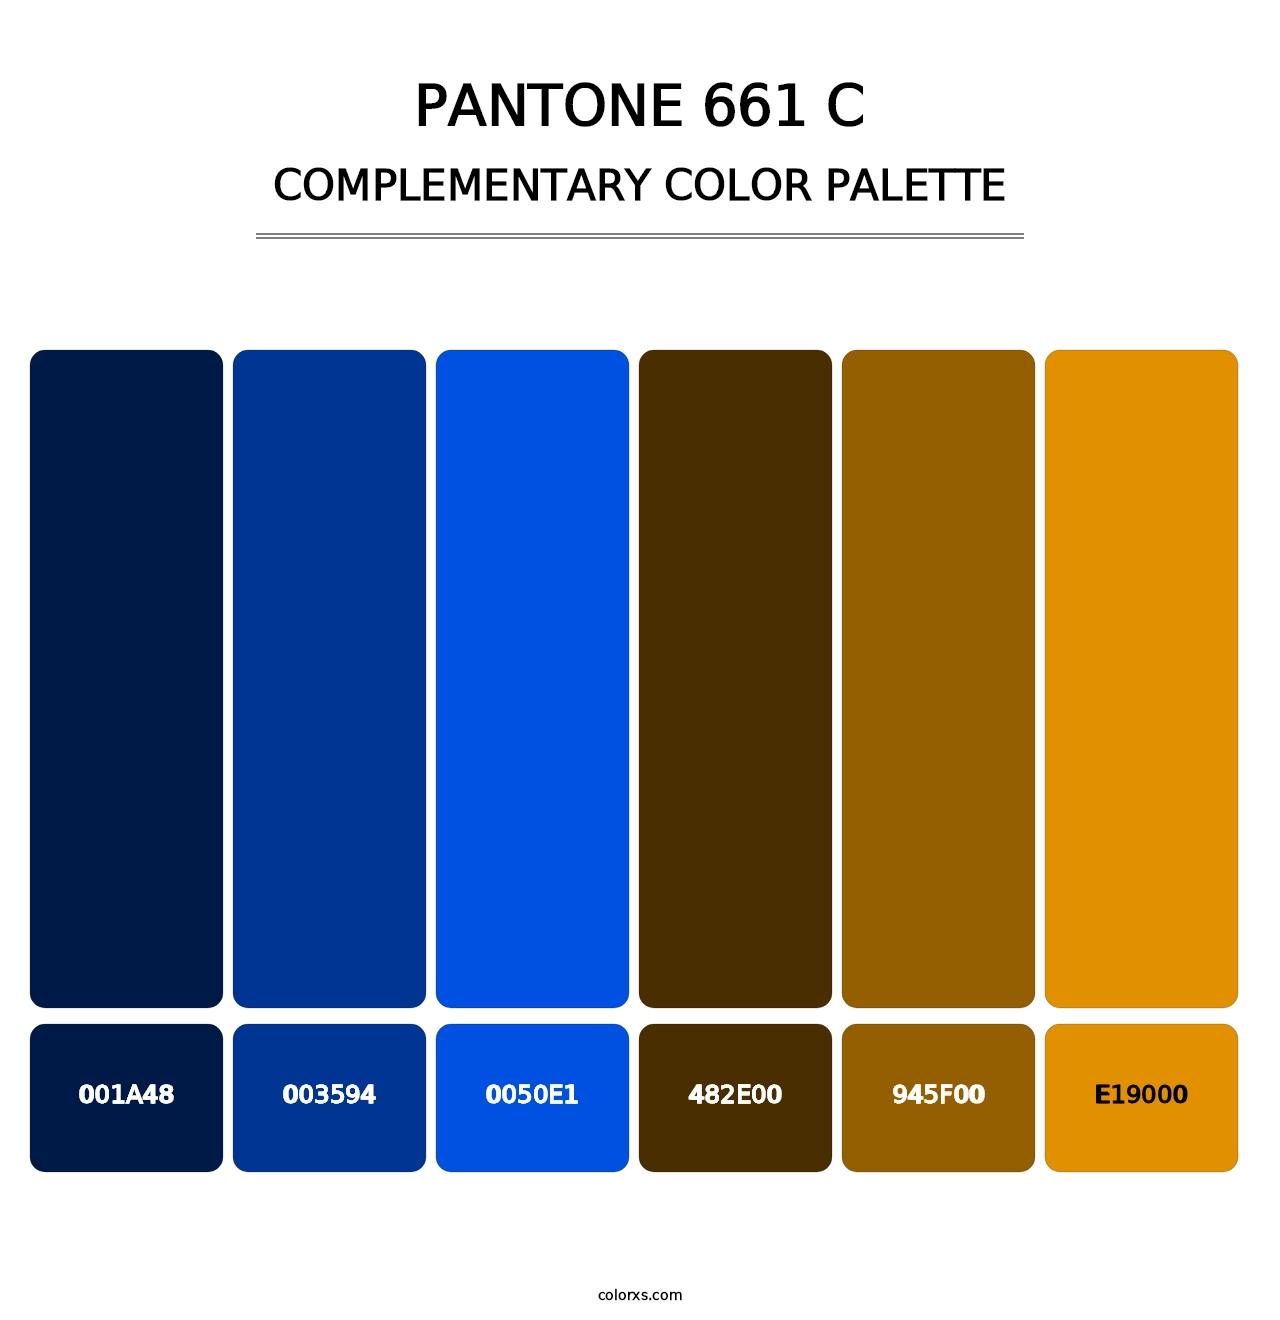 PANTONE 661 C - Complementary Color Palette